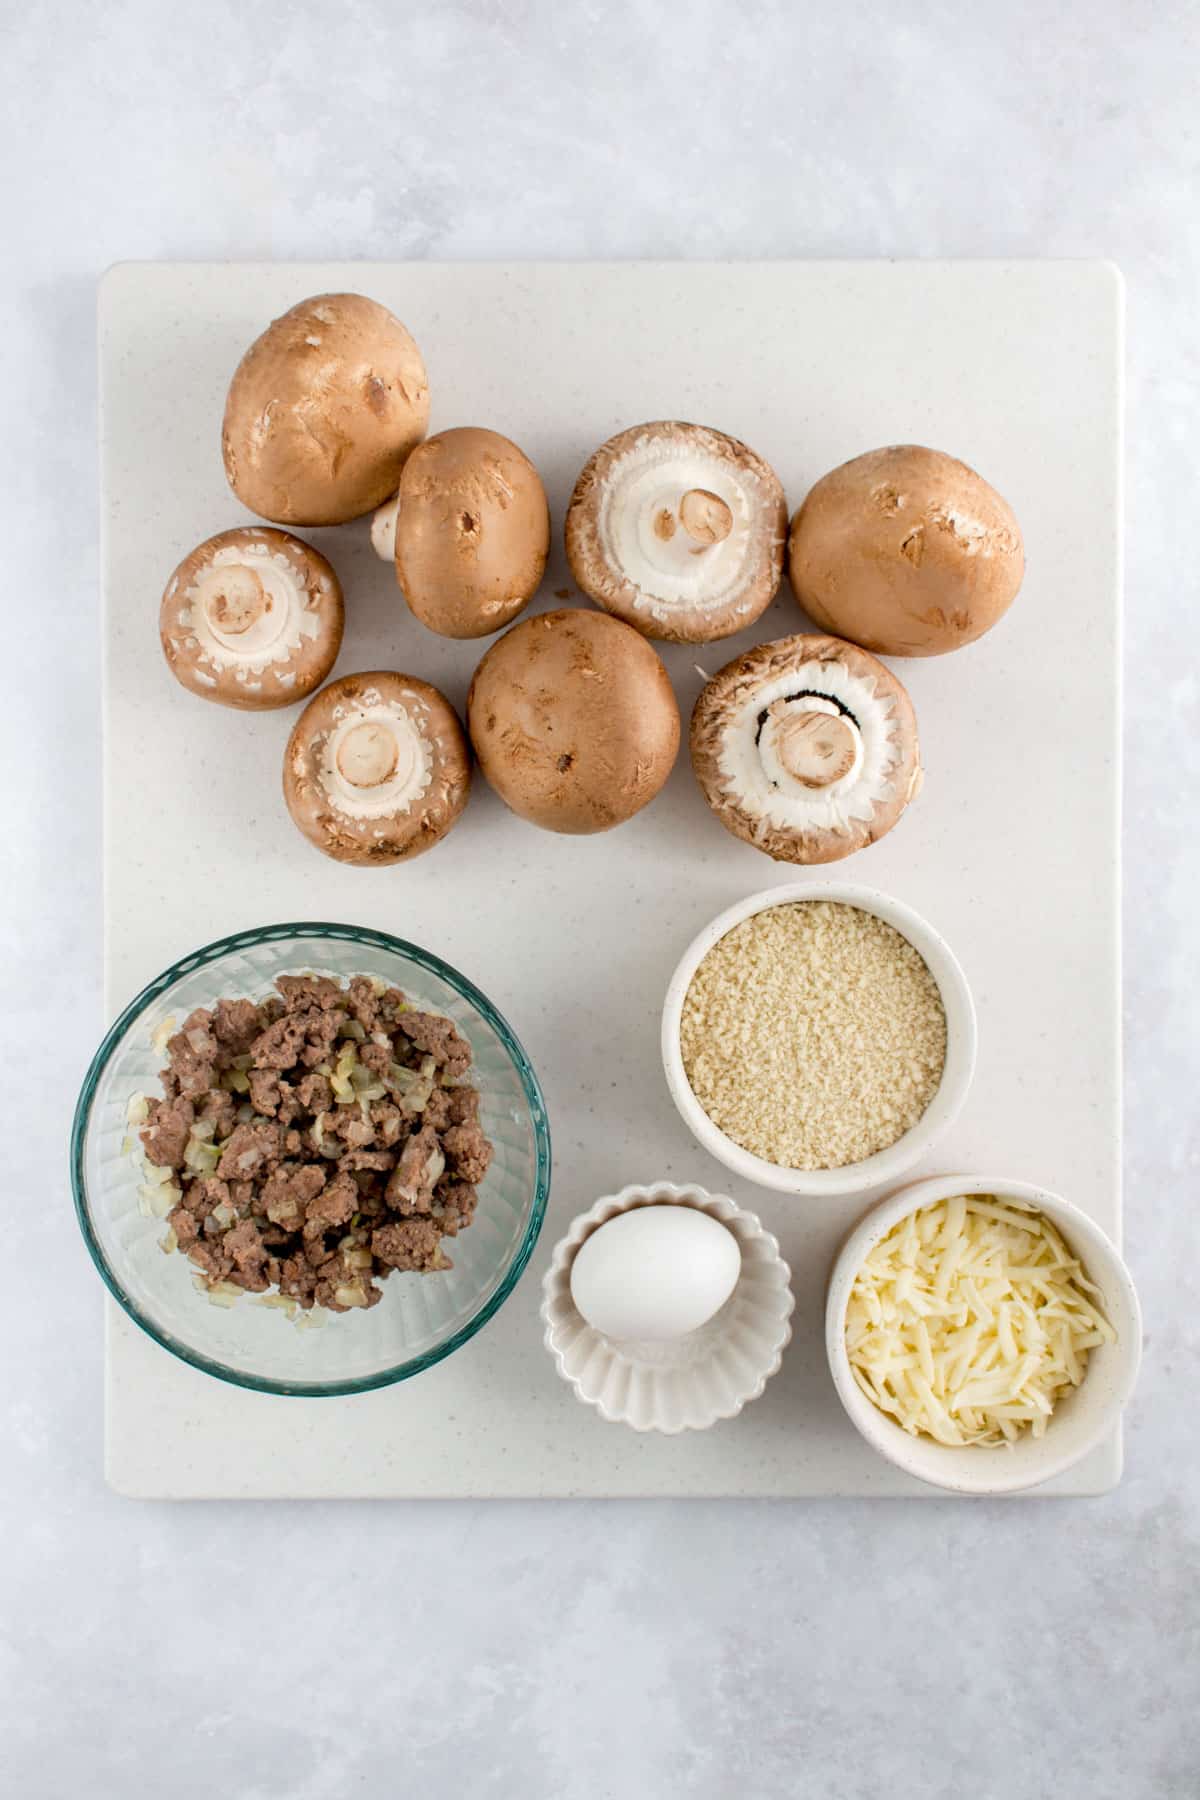 Ingredients to make stuffed mushrooms.